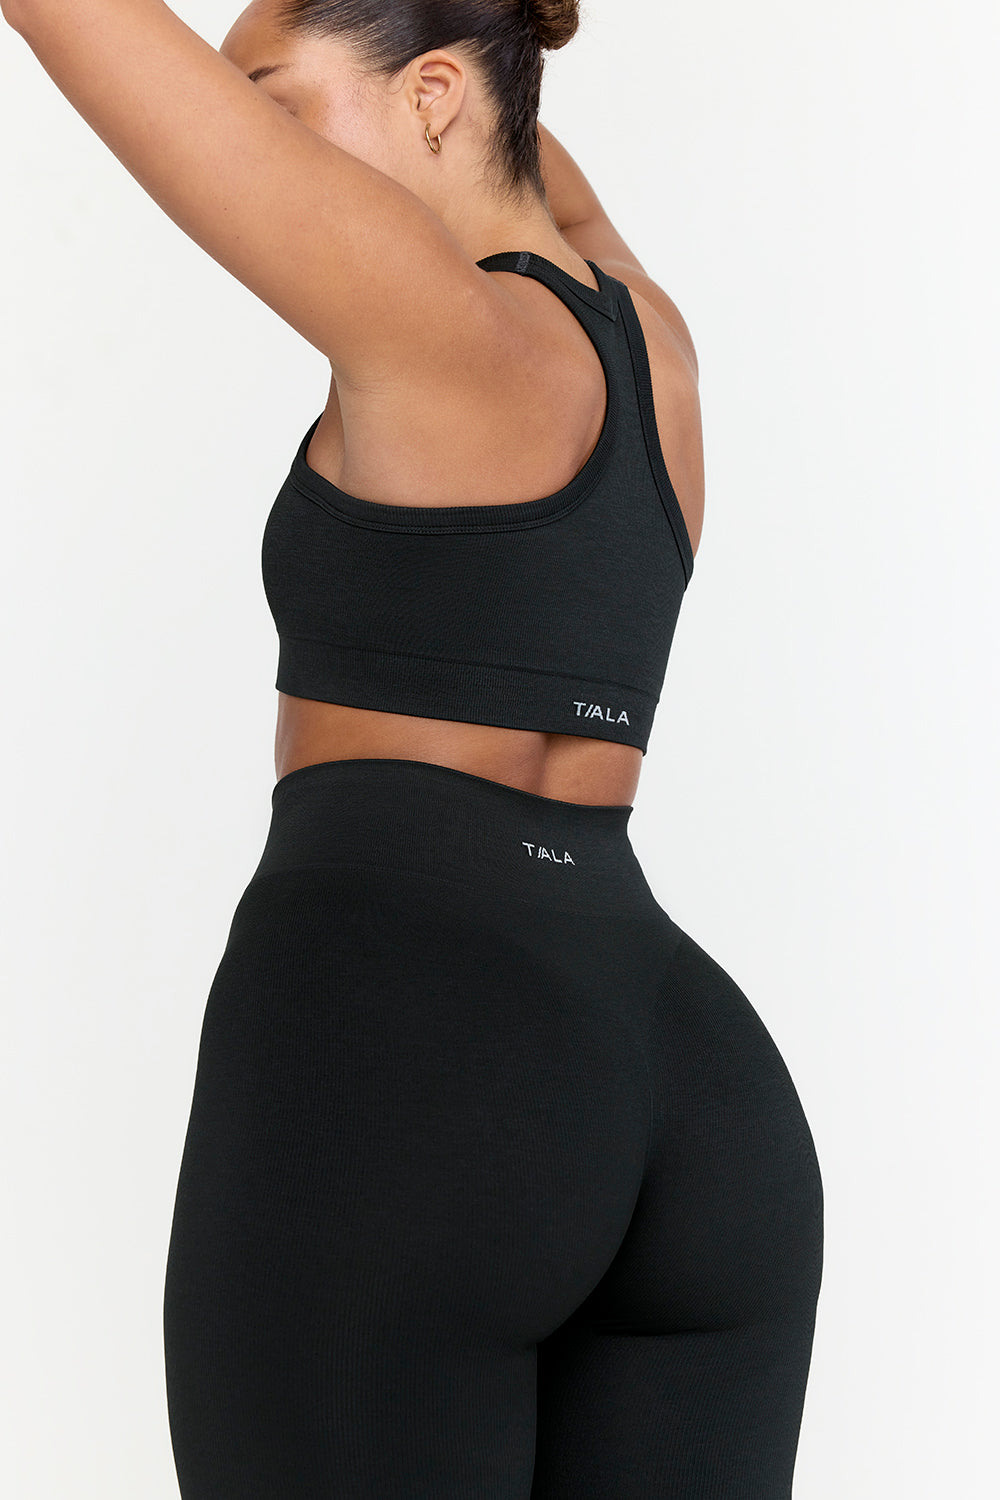 ALWAYS Women's Ribbed Yoga Shorts - Premium Soft High Waist Rib